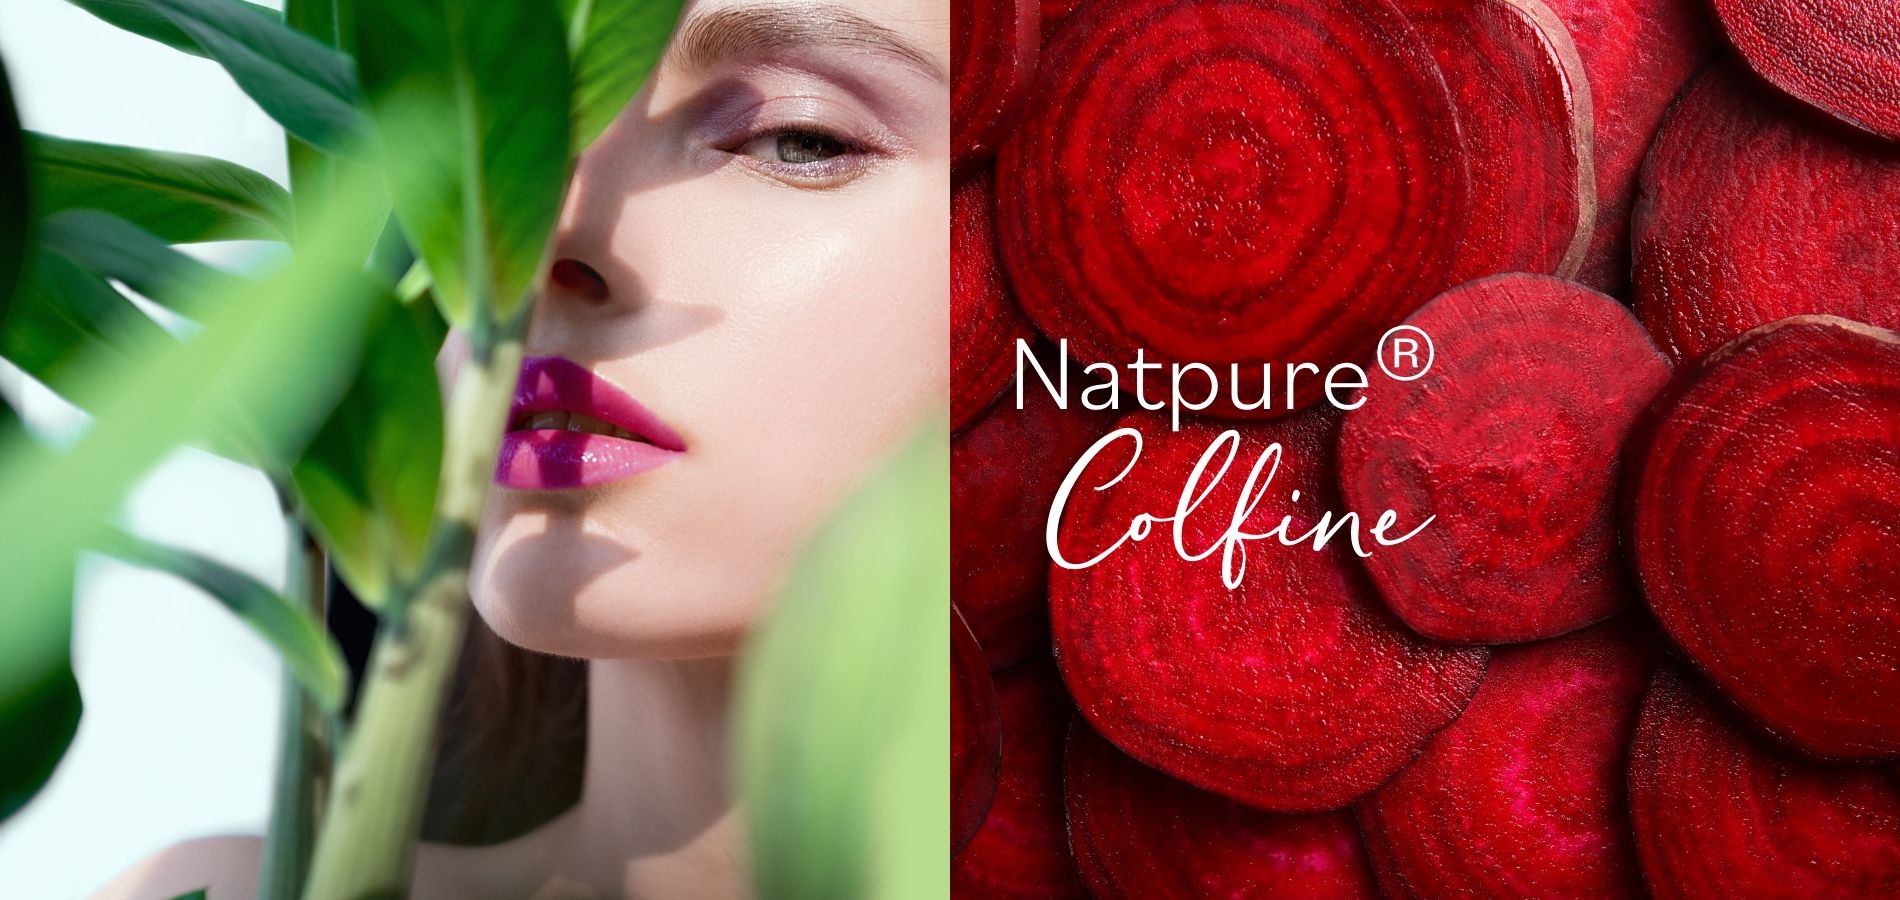 Natpure Colfine Website Featured Image